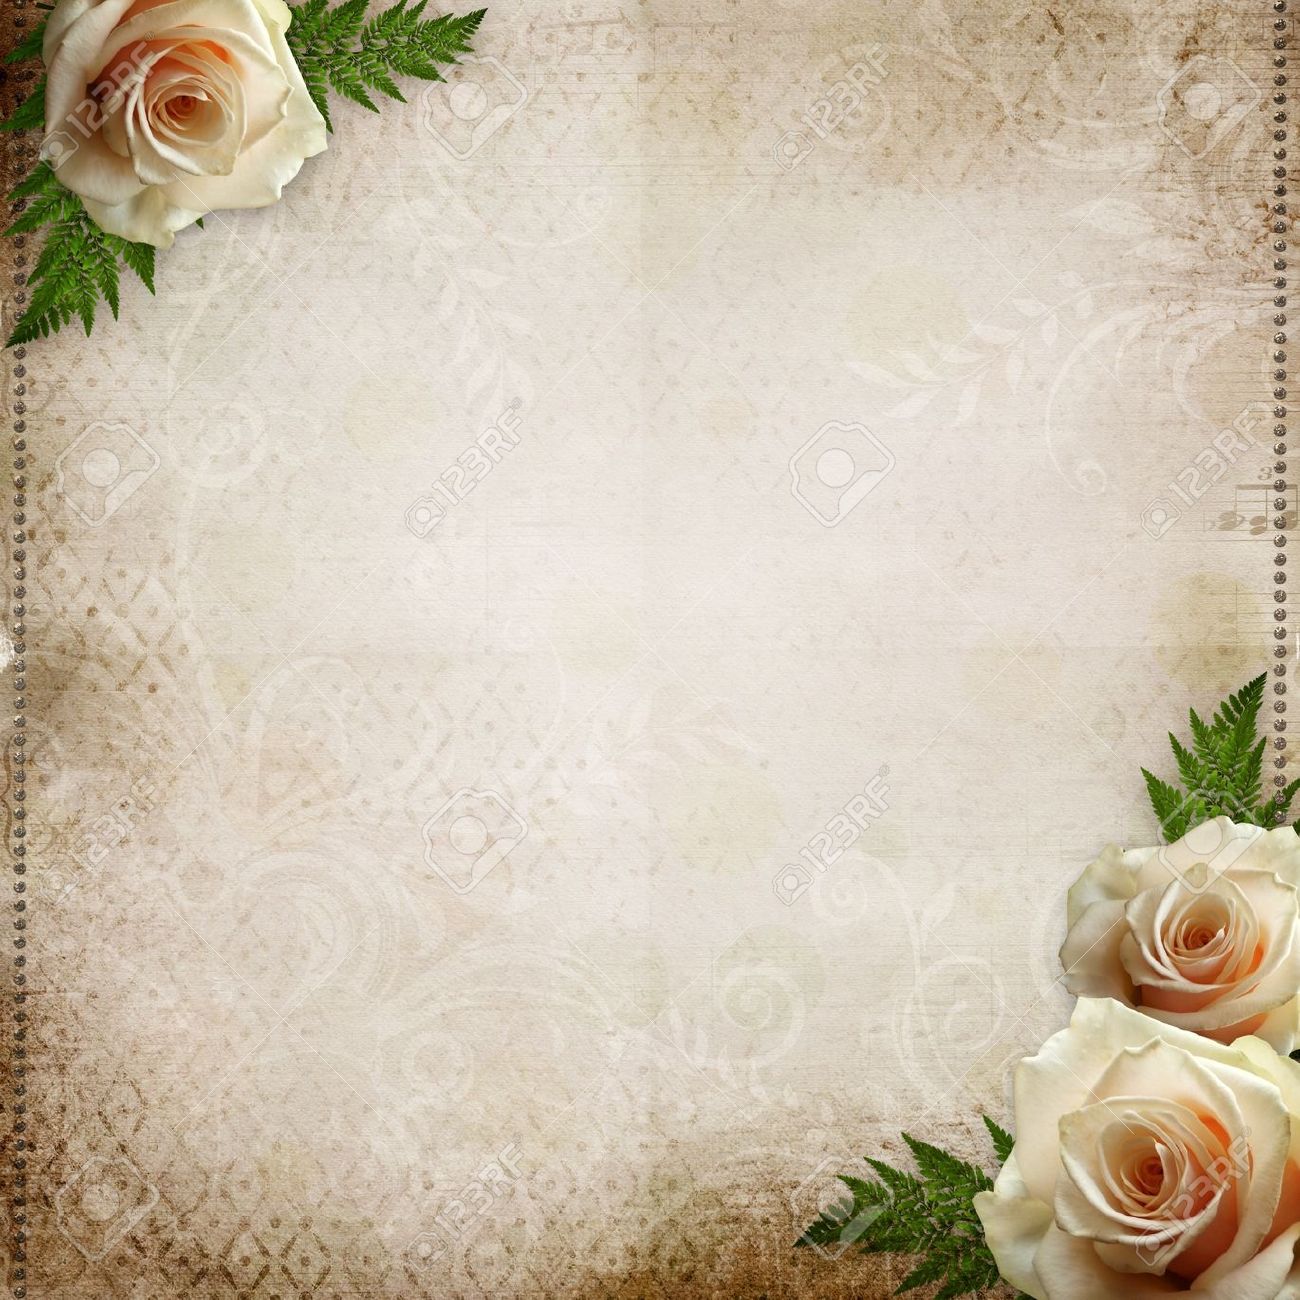 Wedding Background Image HD